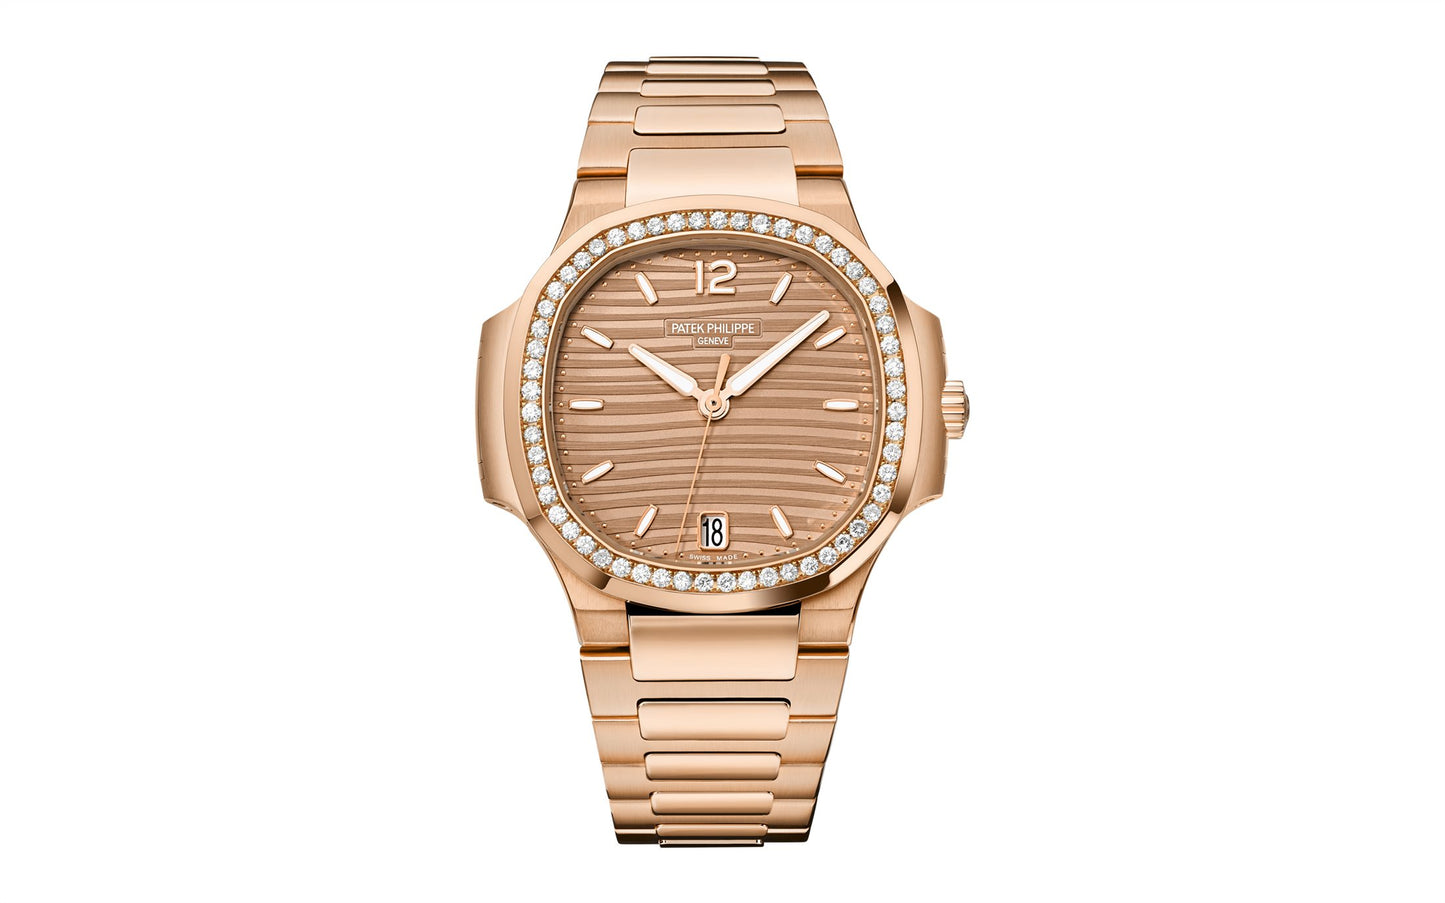 Patek Philippe Nautilus Ladies Automatic Watch, 18k Rose Gold and Diamonds, 35,2mm, Ref# 7118/1200R-010, 1